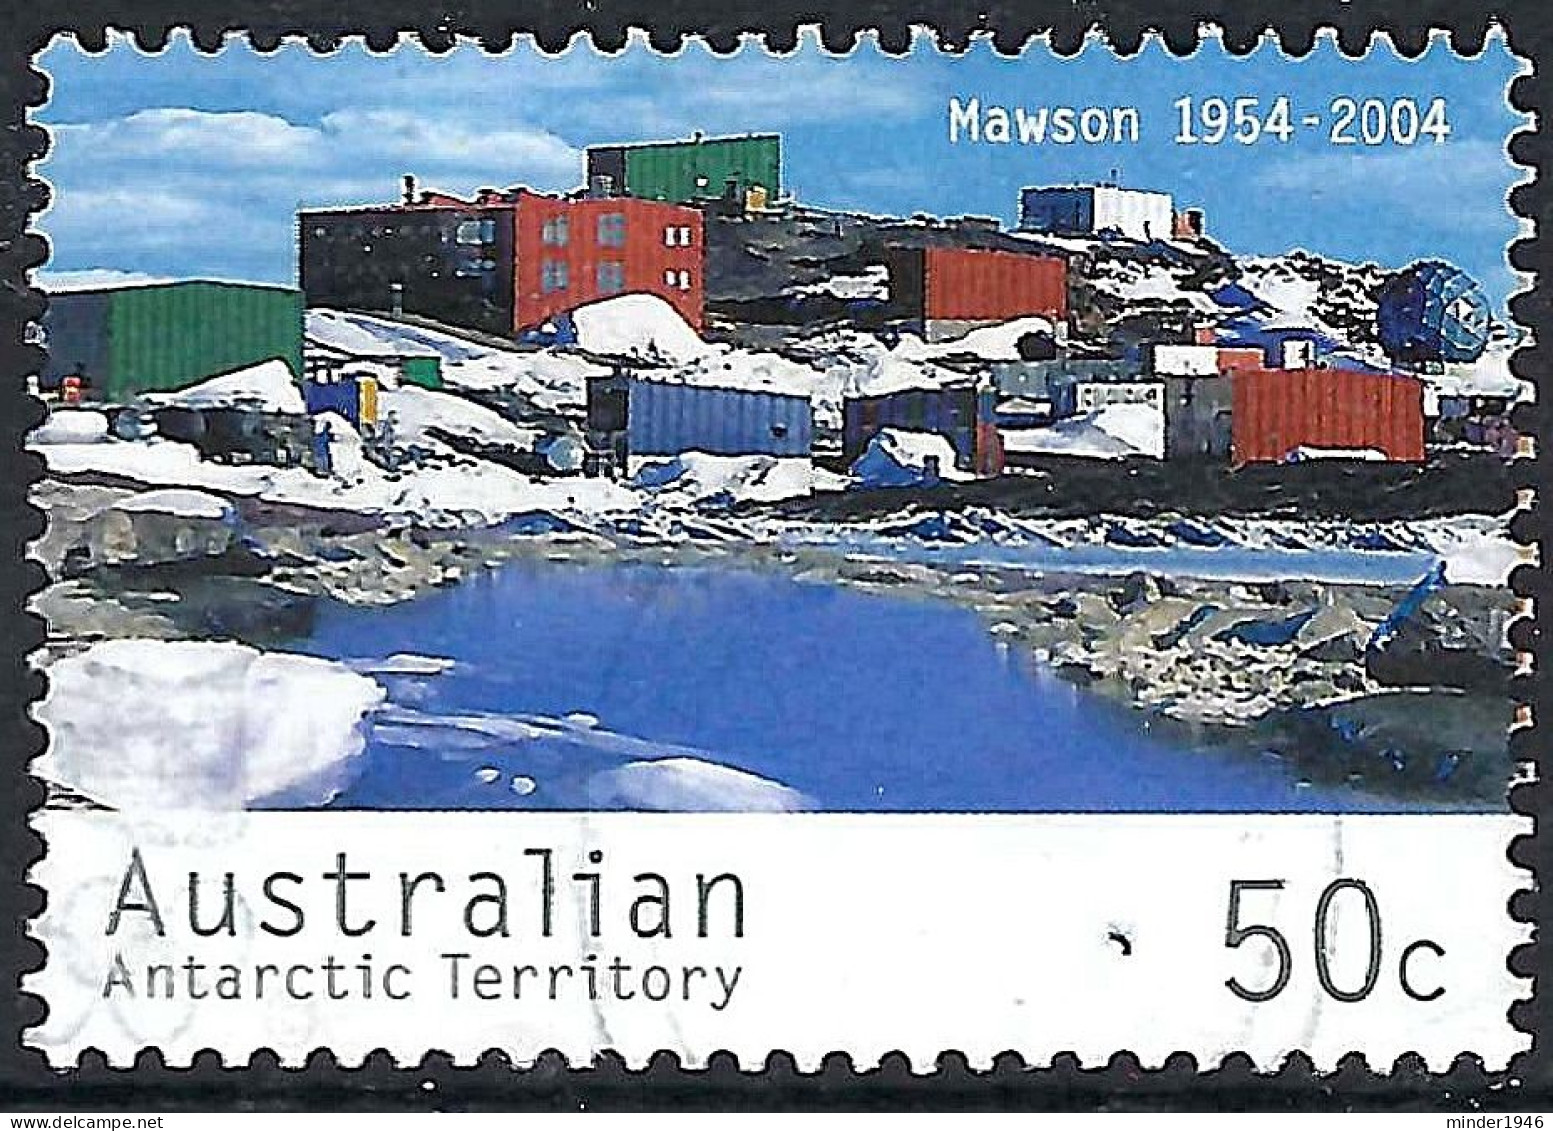 AUSTRALIAN ANTARCTIC TERRITORY (AAT) 2004 50c, Multicoloured, 50th Anniversary Mawson Station-Mawson Station FU - Oblitérés